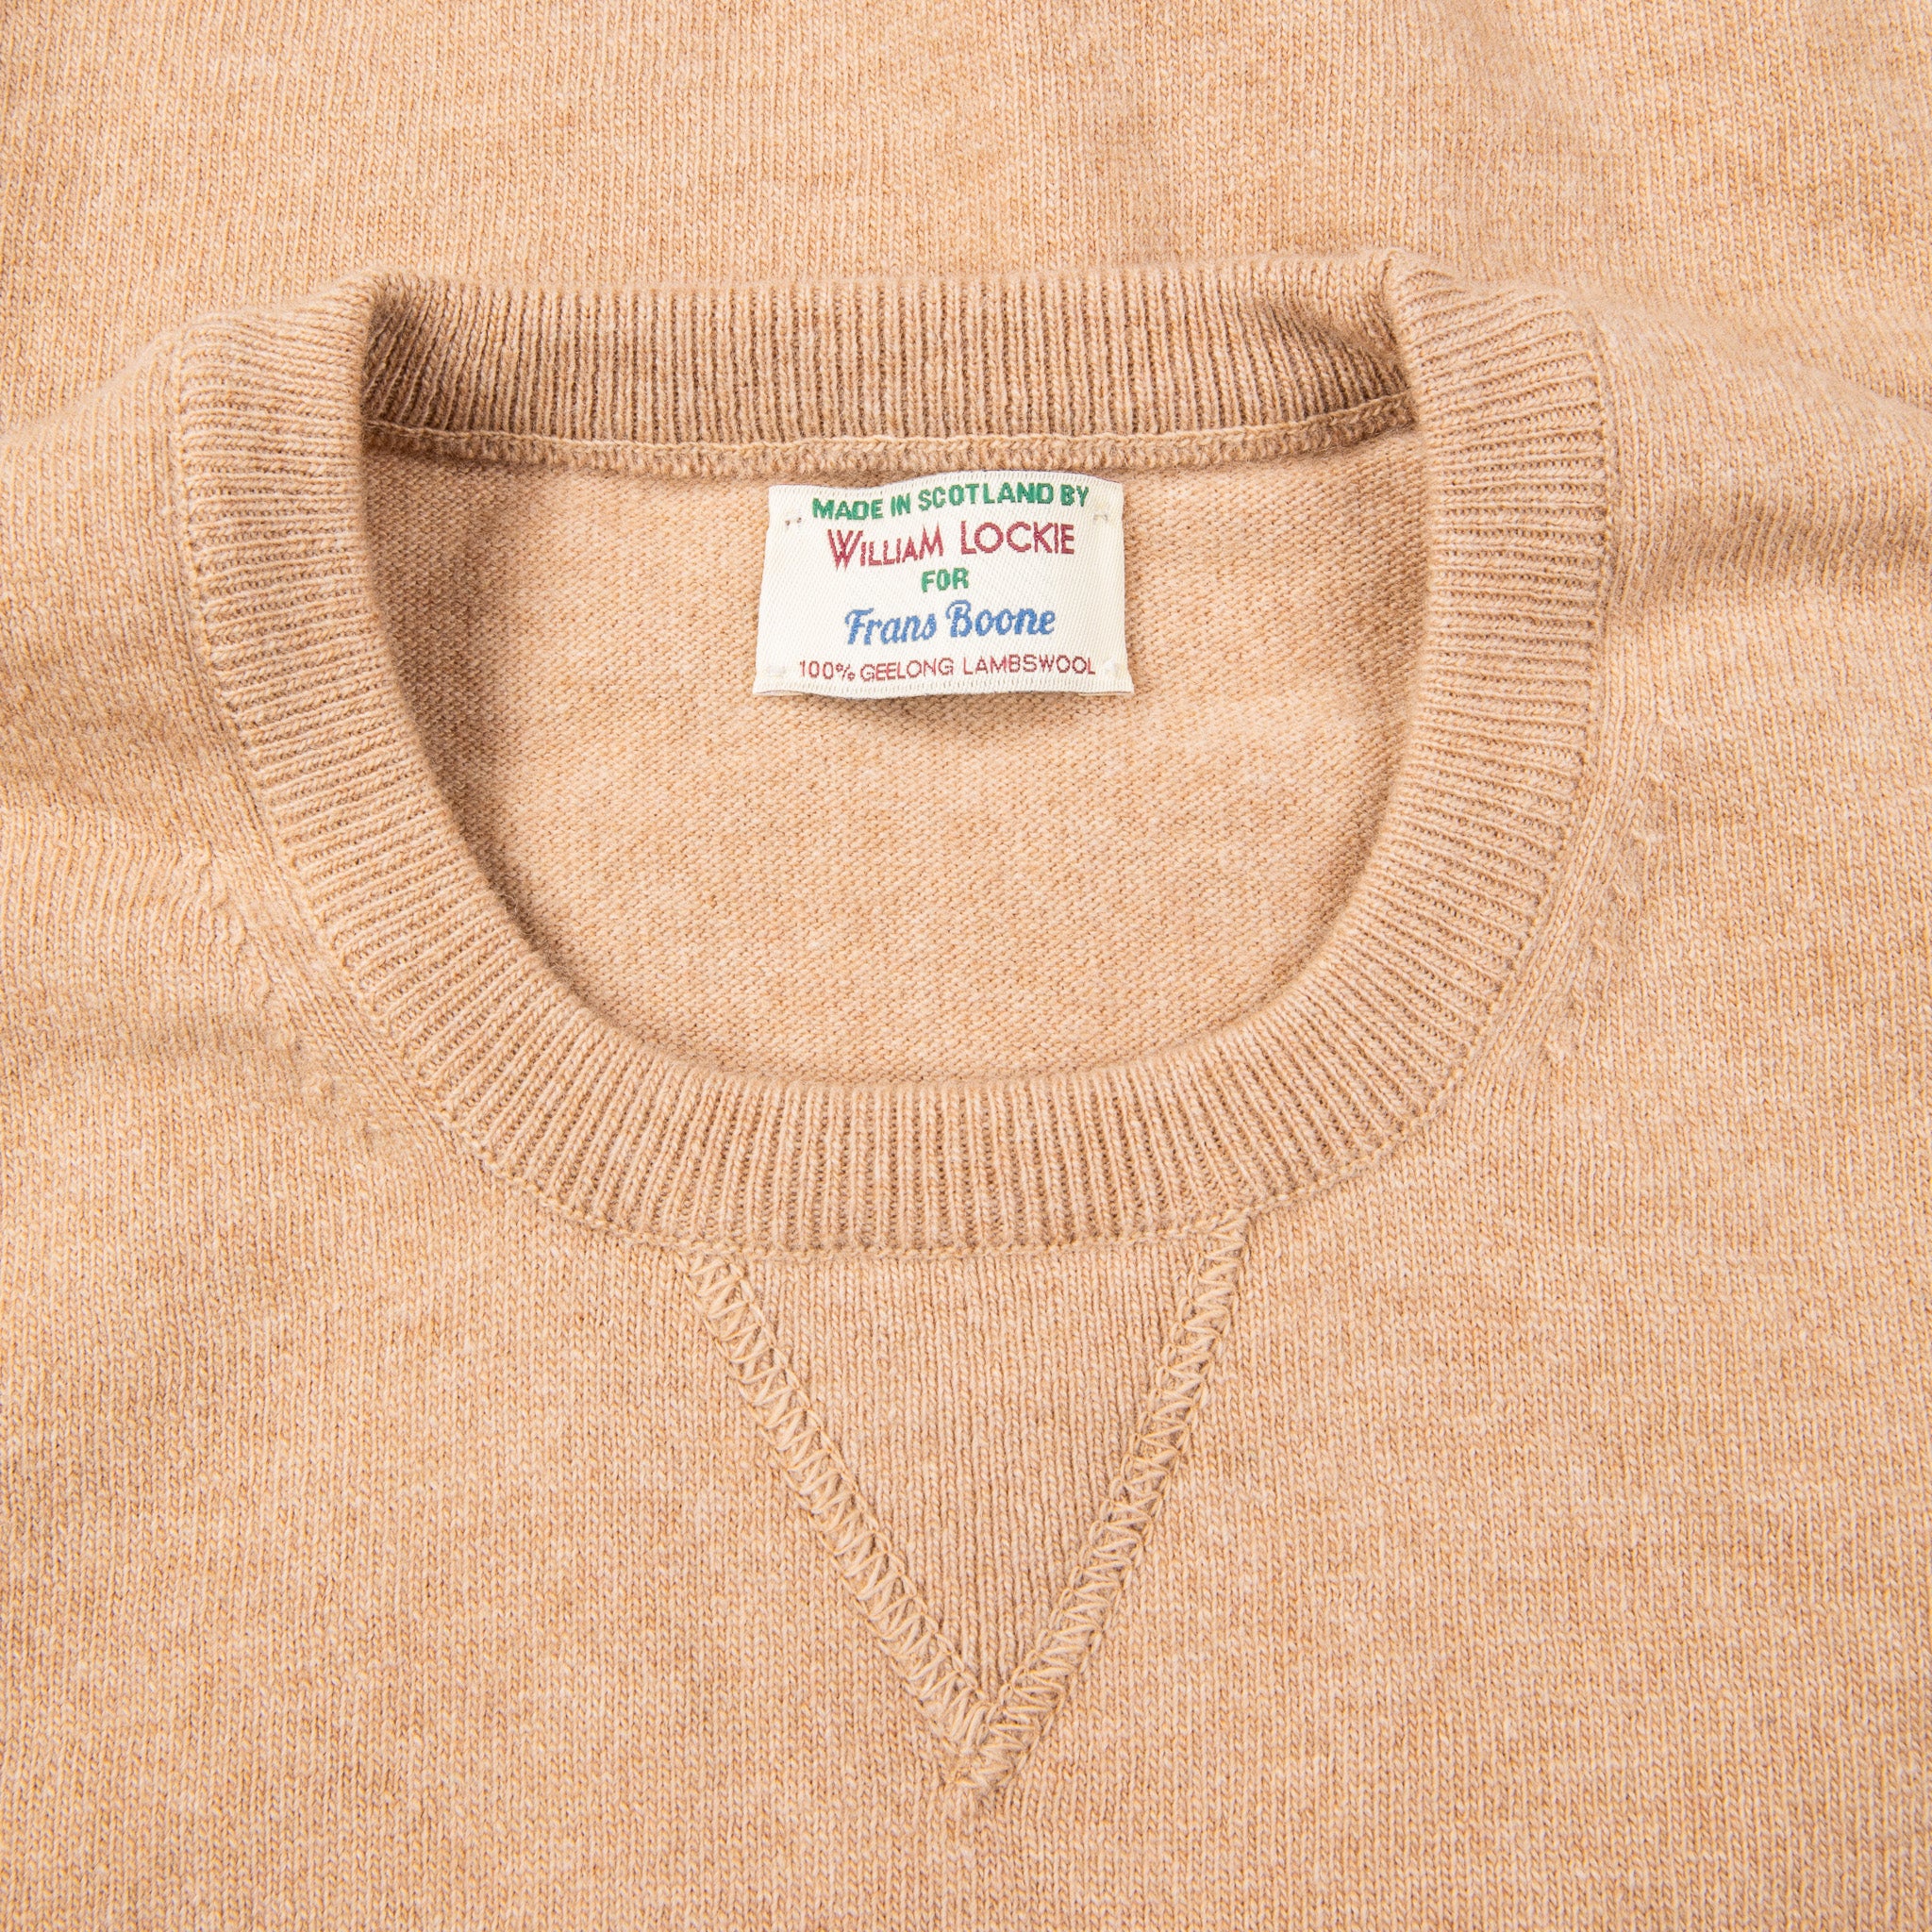 William Lockie x Frans Boone Super Geelong Vintage fit sweater Sandstorm